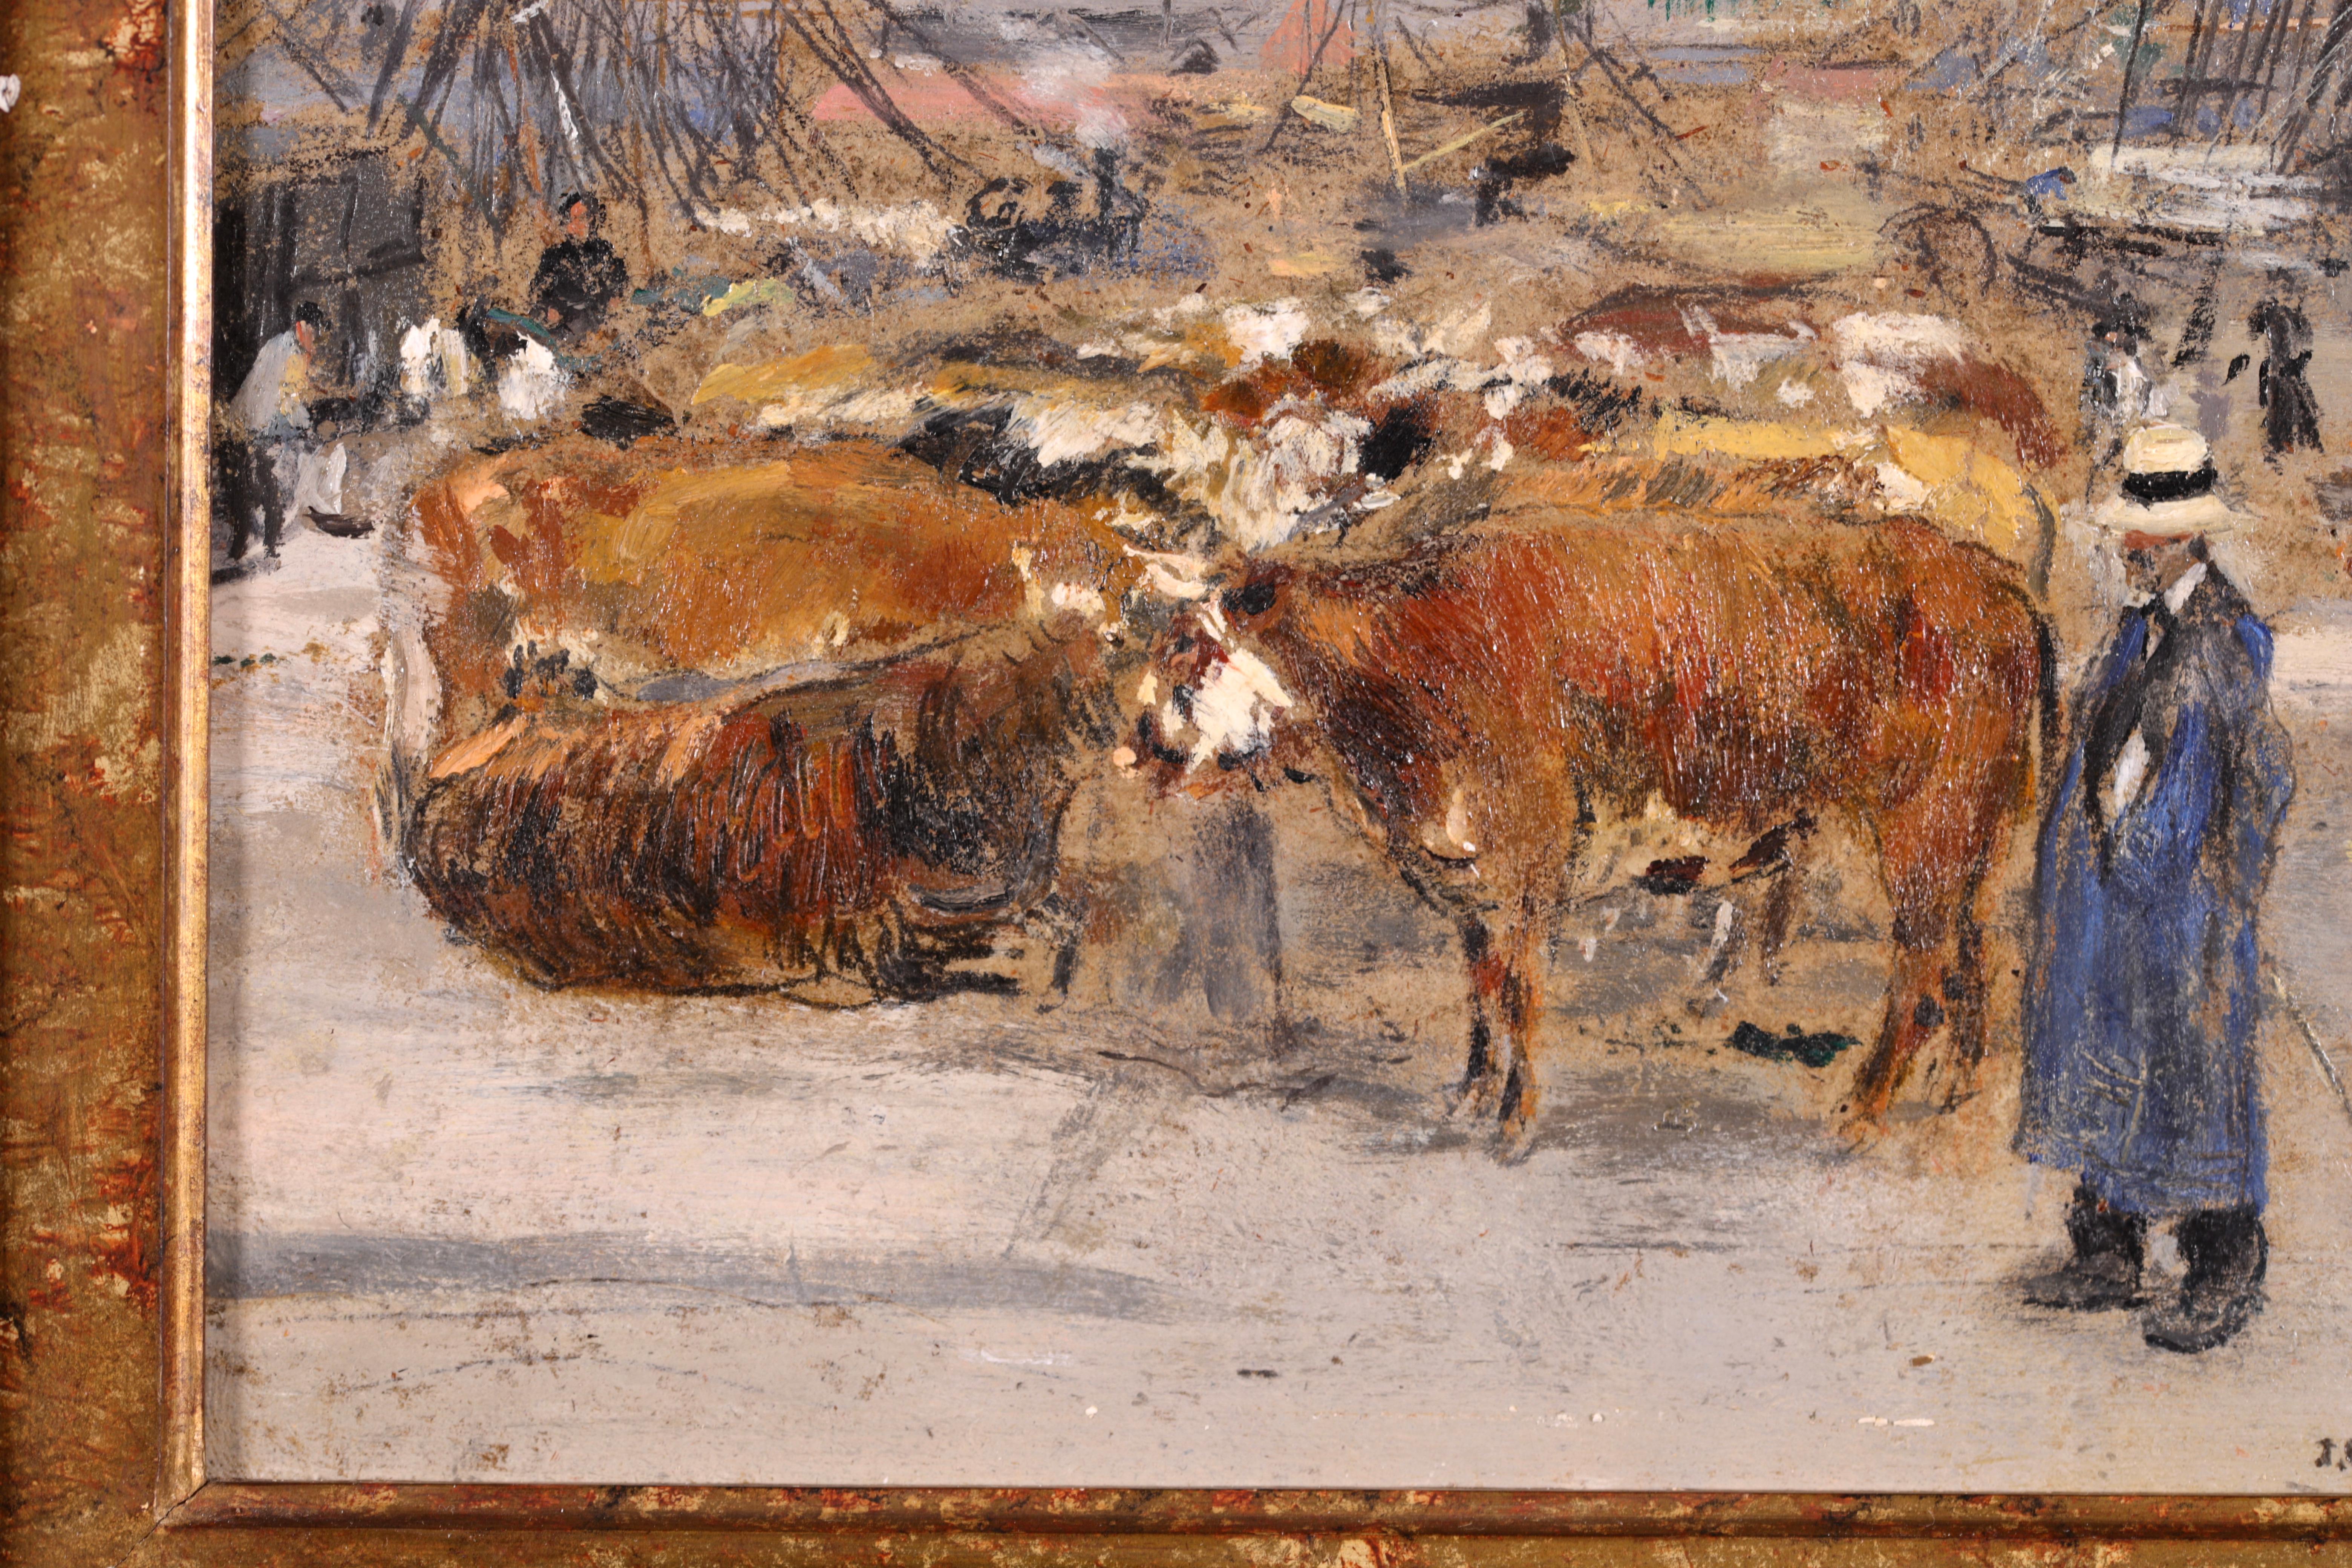  L'embarquement de boeufs - Impressionist Oil, Cattle by Jean Francois Raffaelli - Brown Animal Painting by Jean-Francois Raffaelli